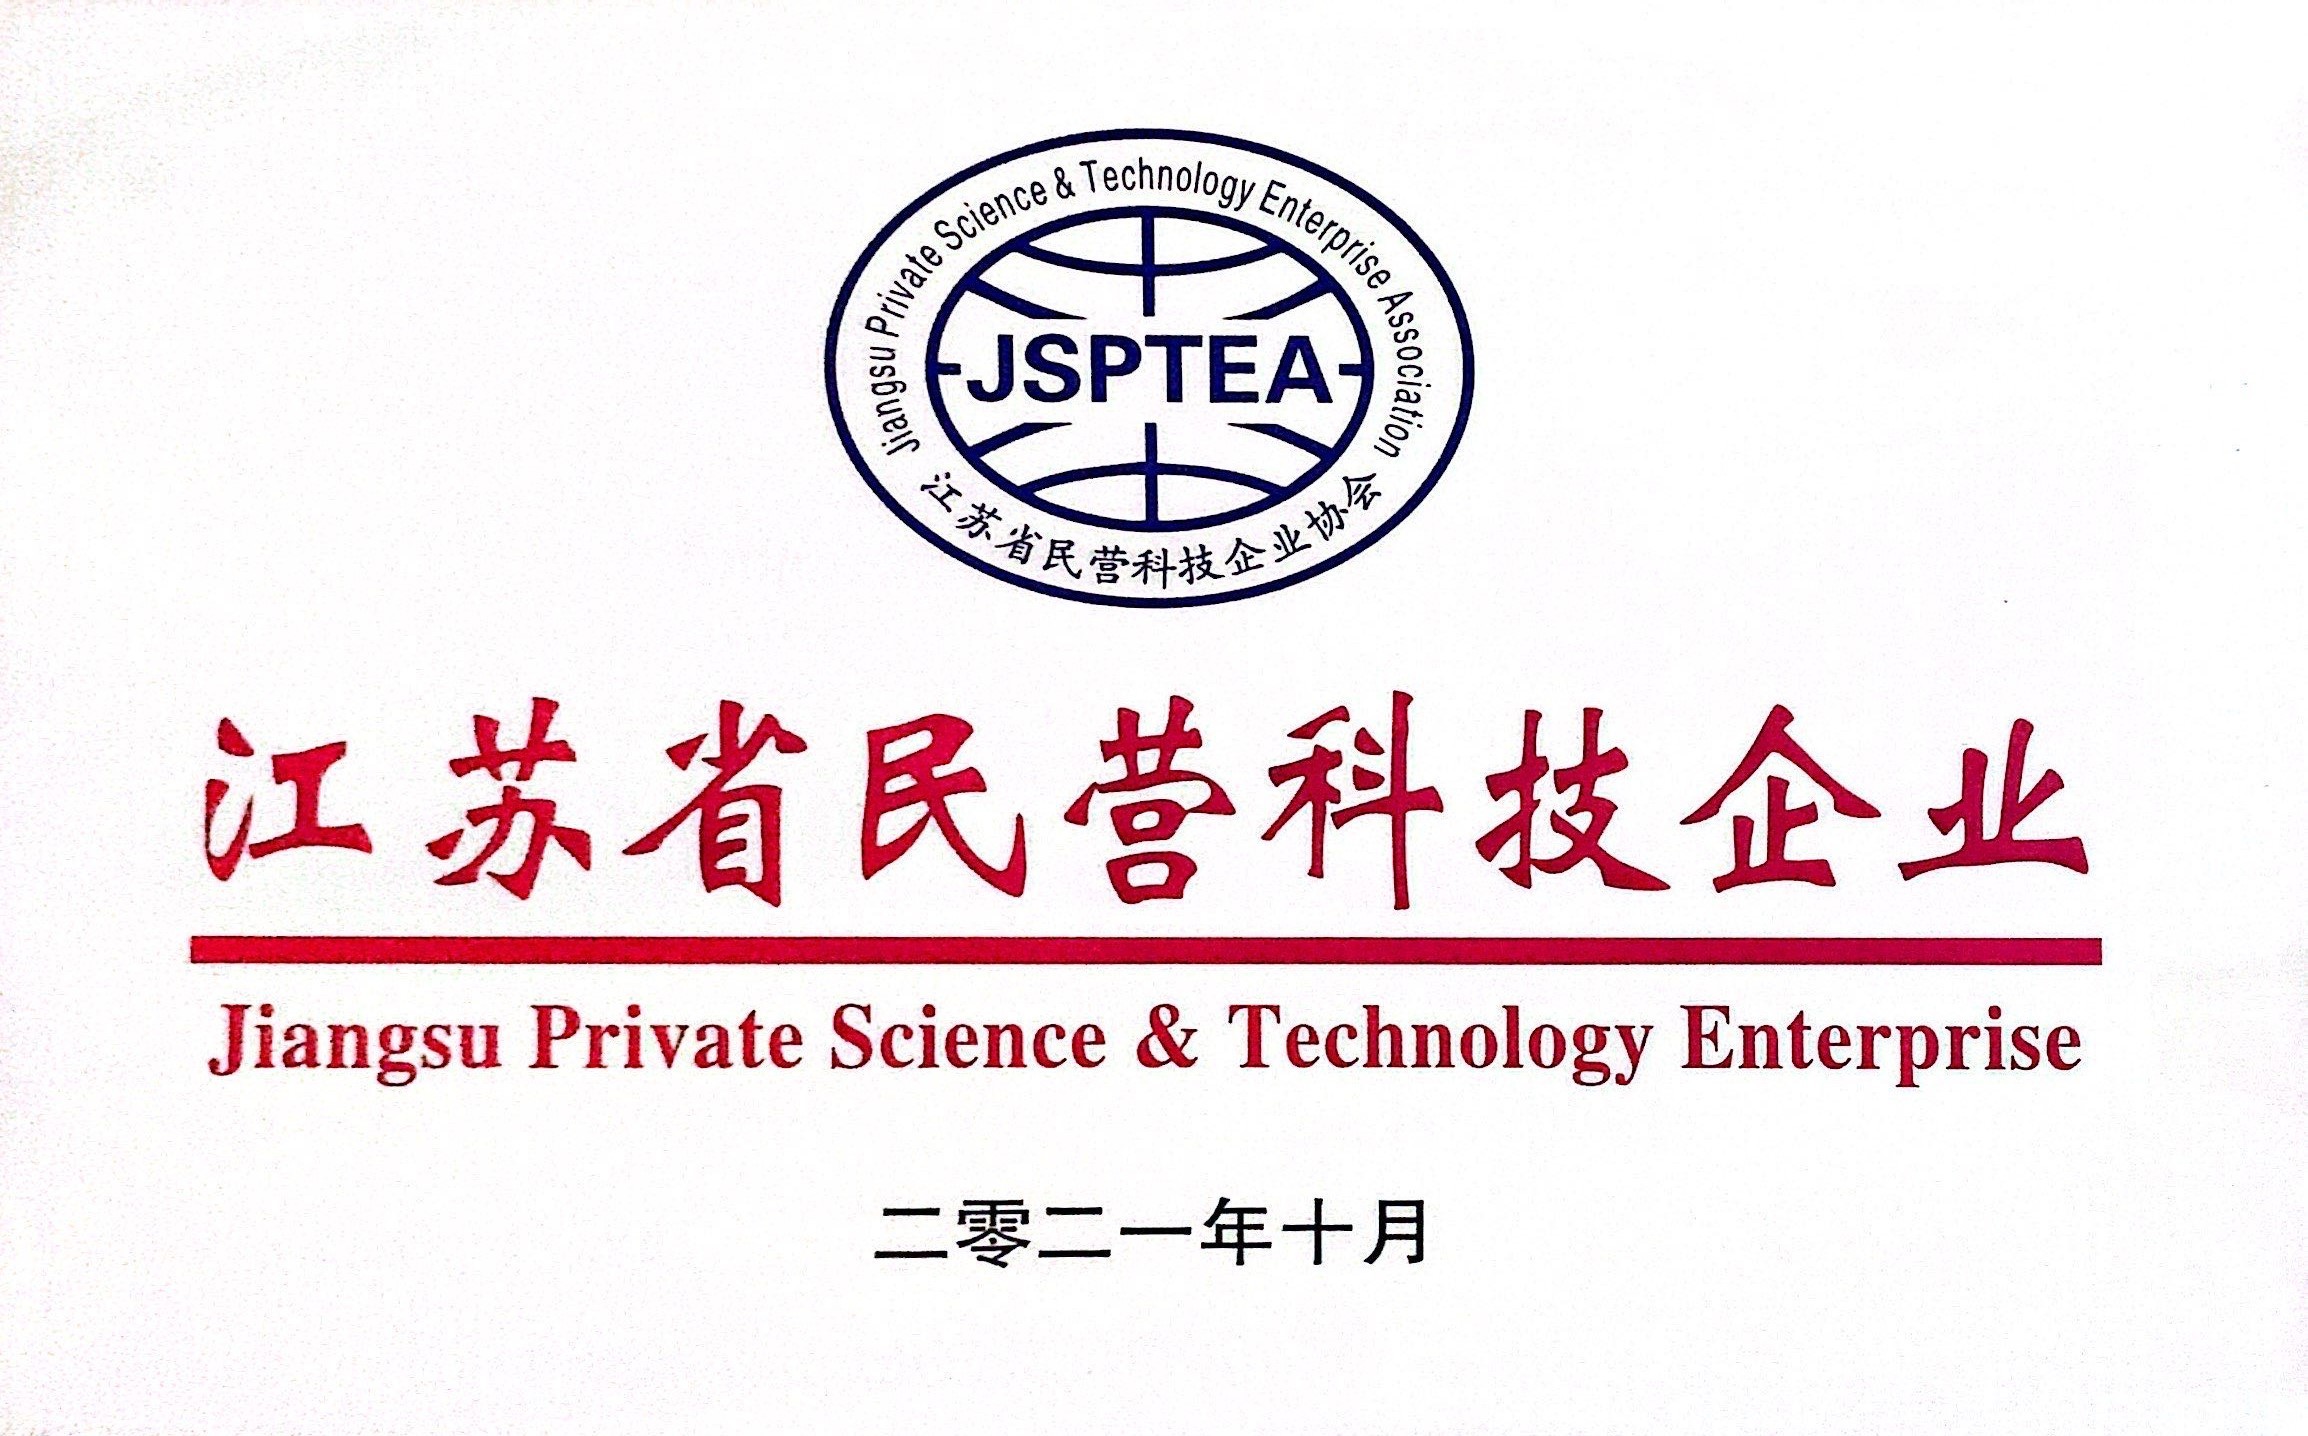 Jiangsu Province Private Technology Enterprise